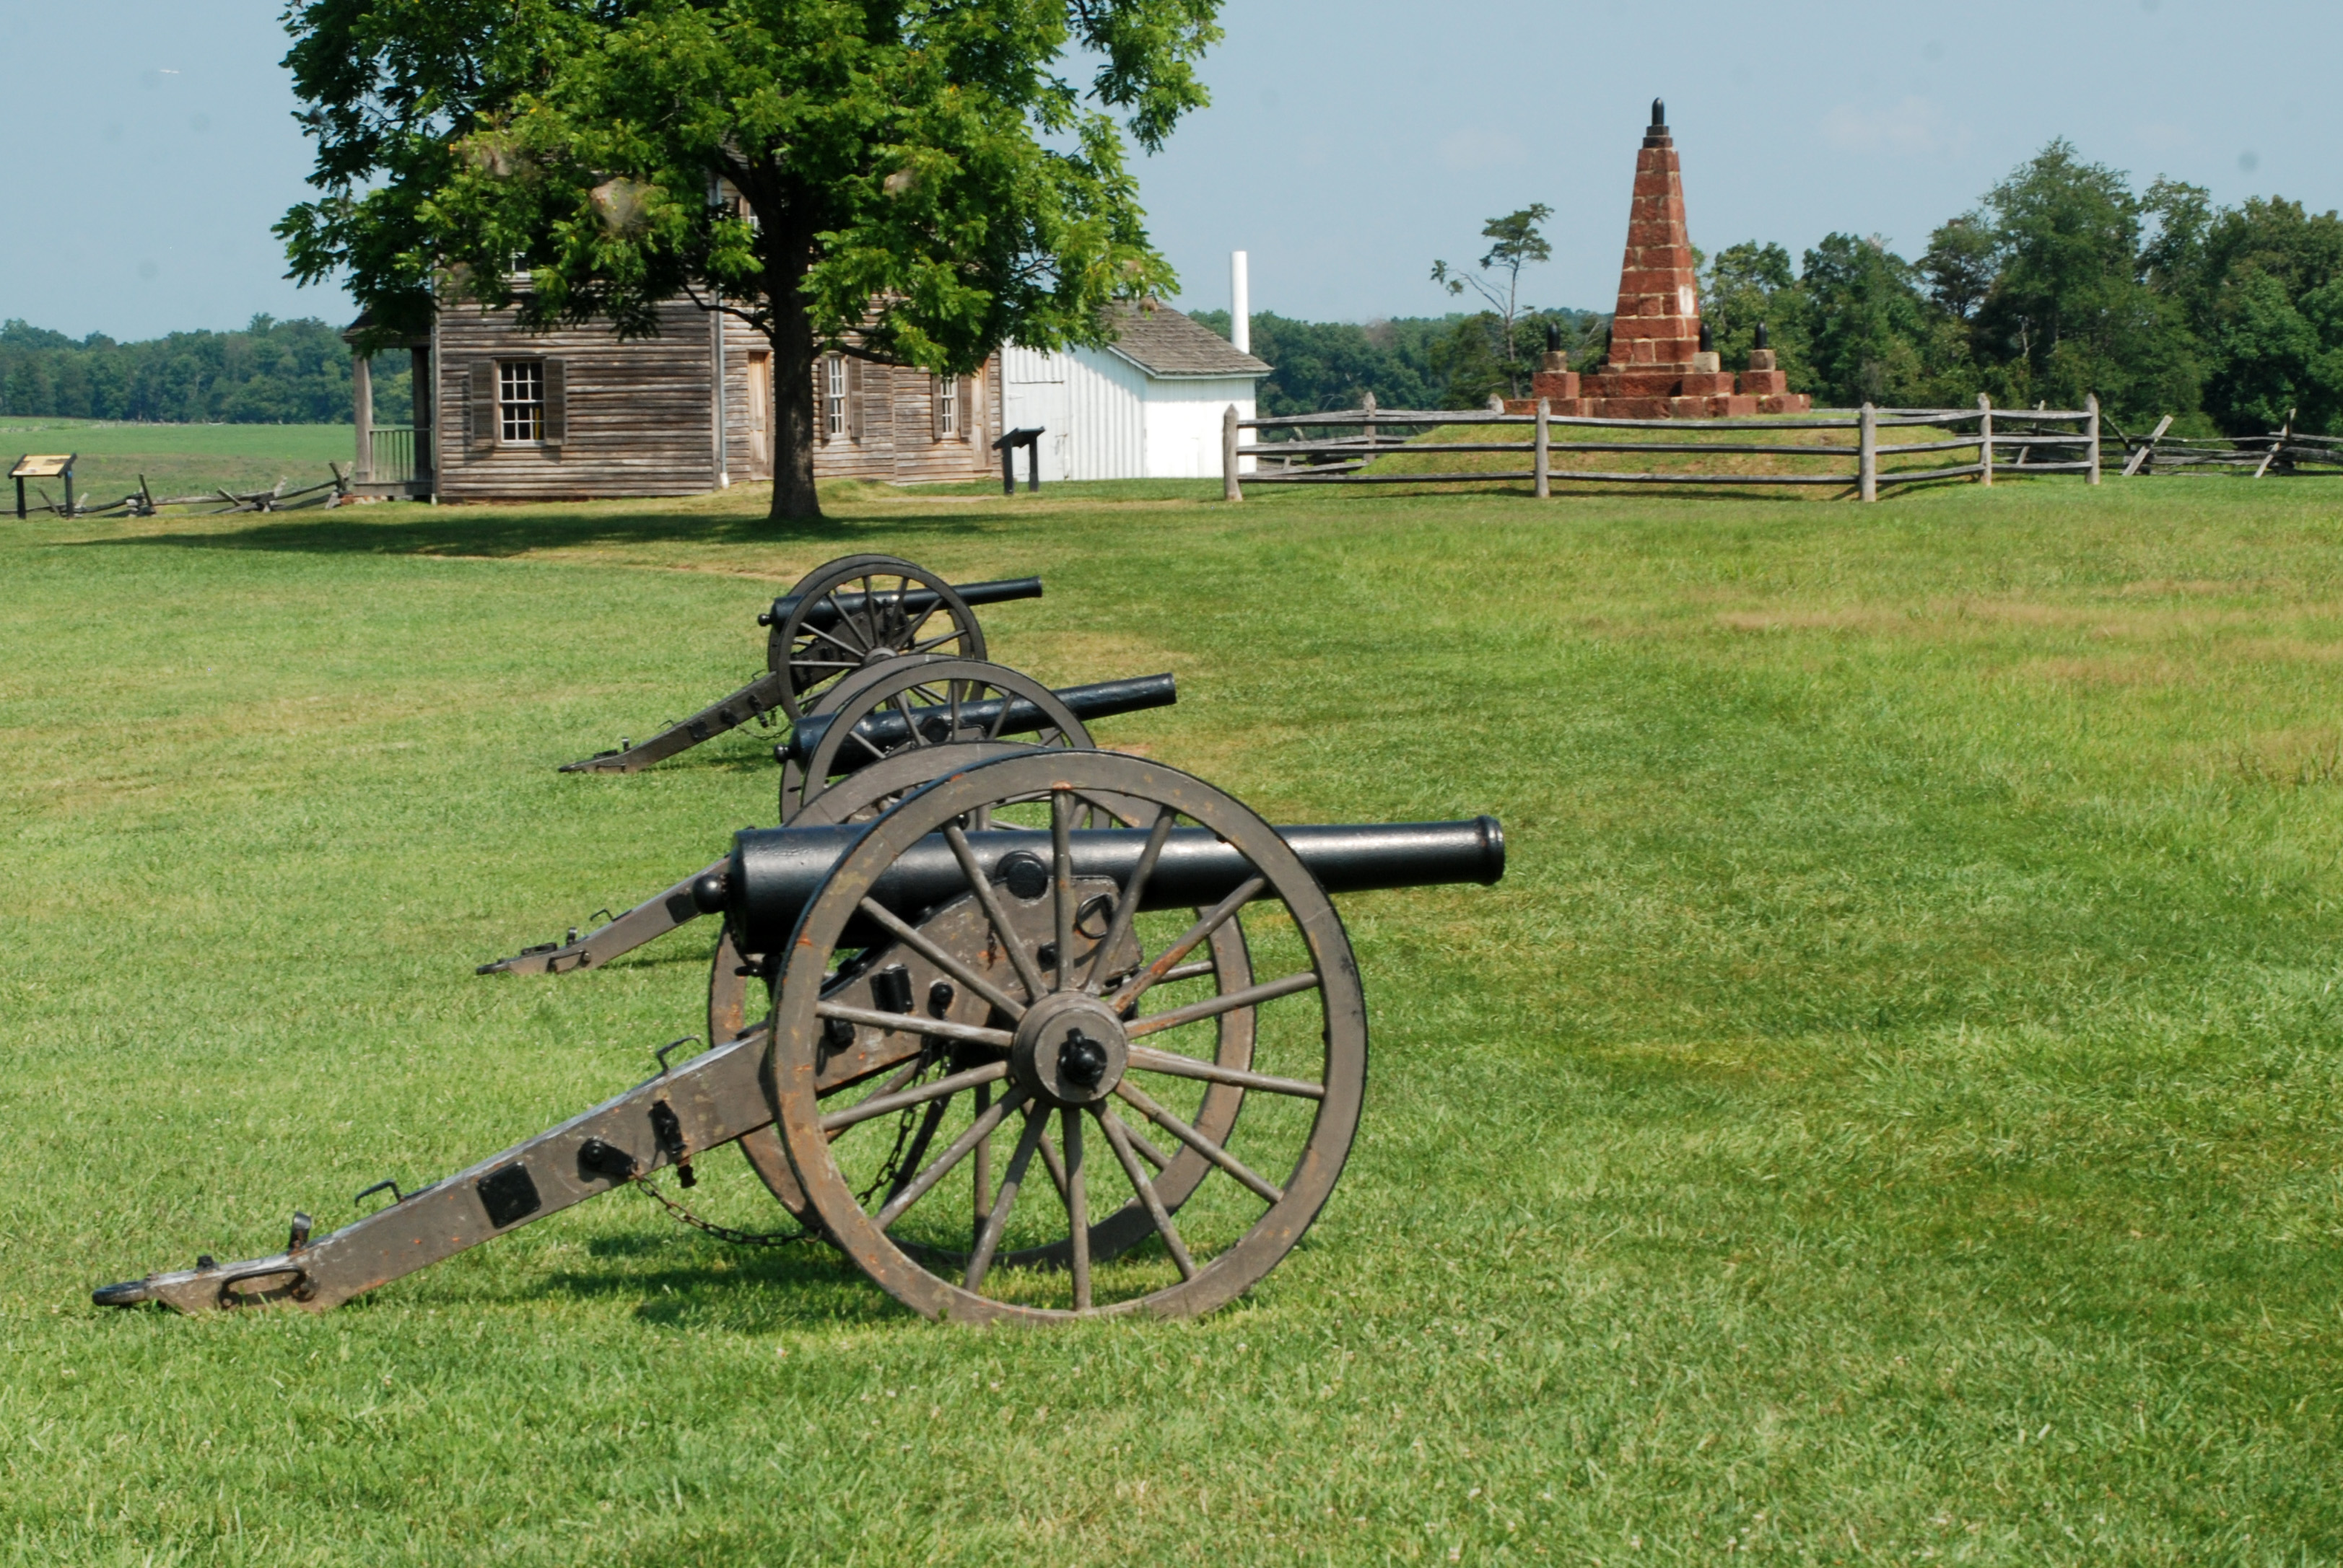 Cannons in a field